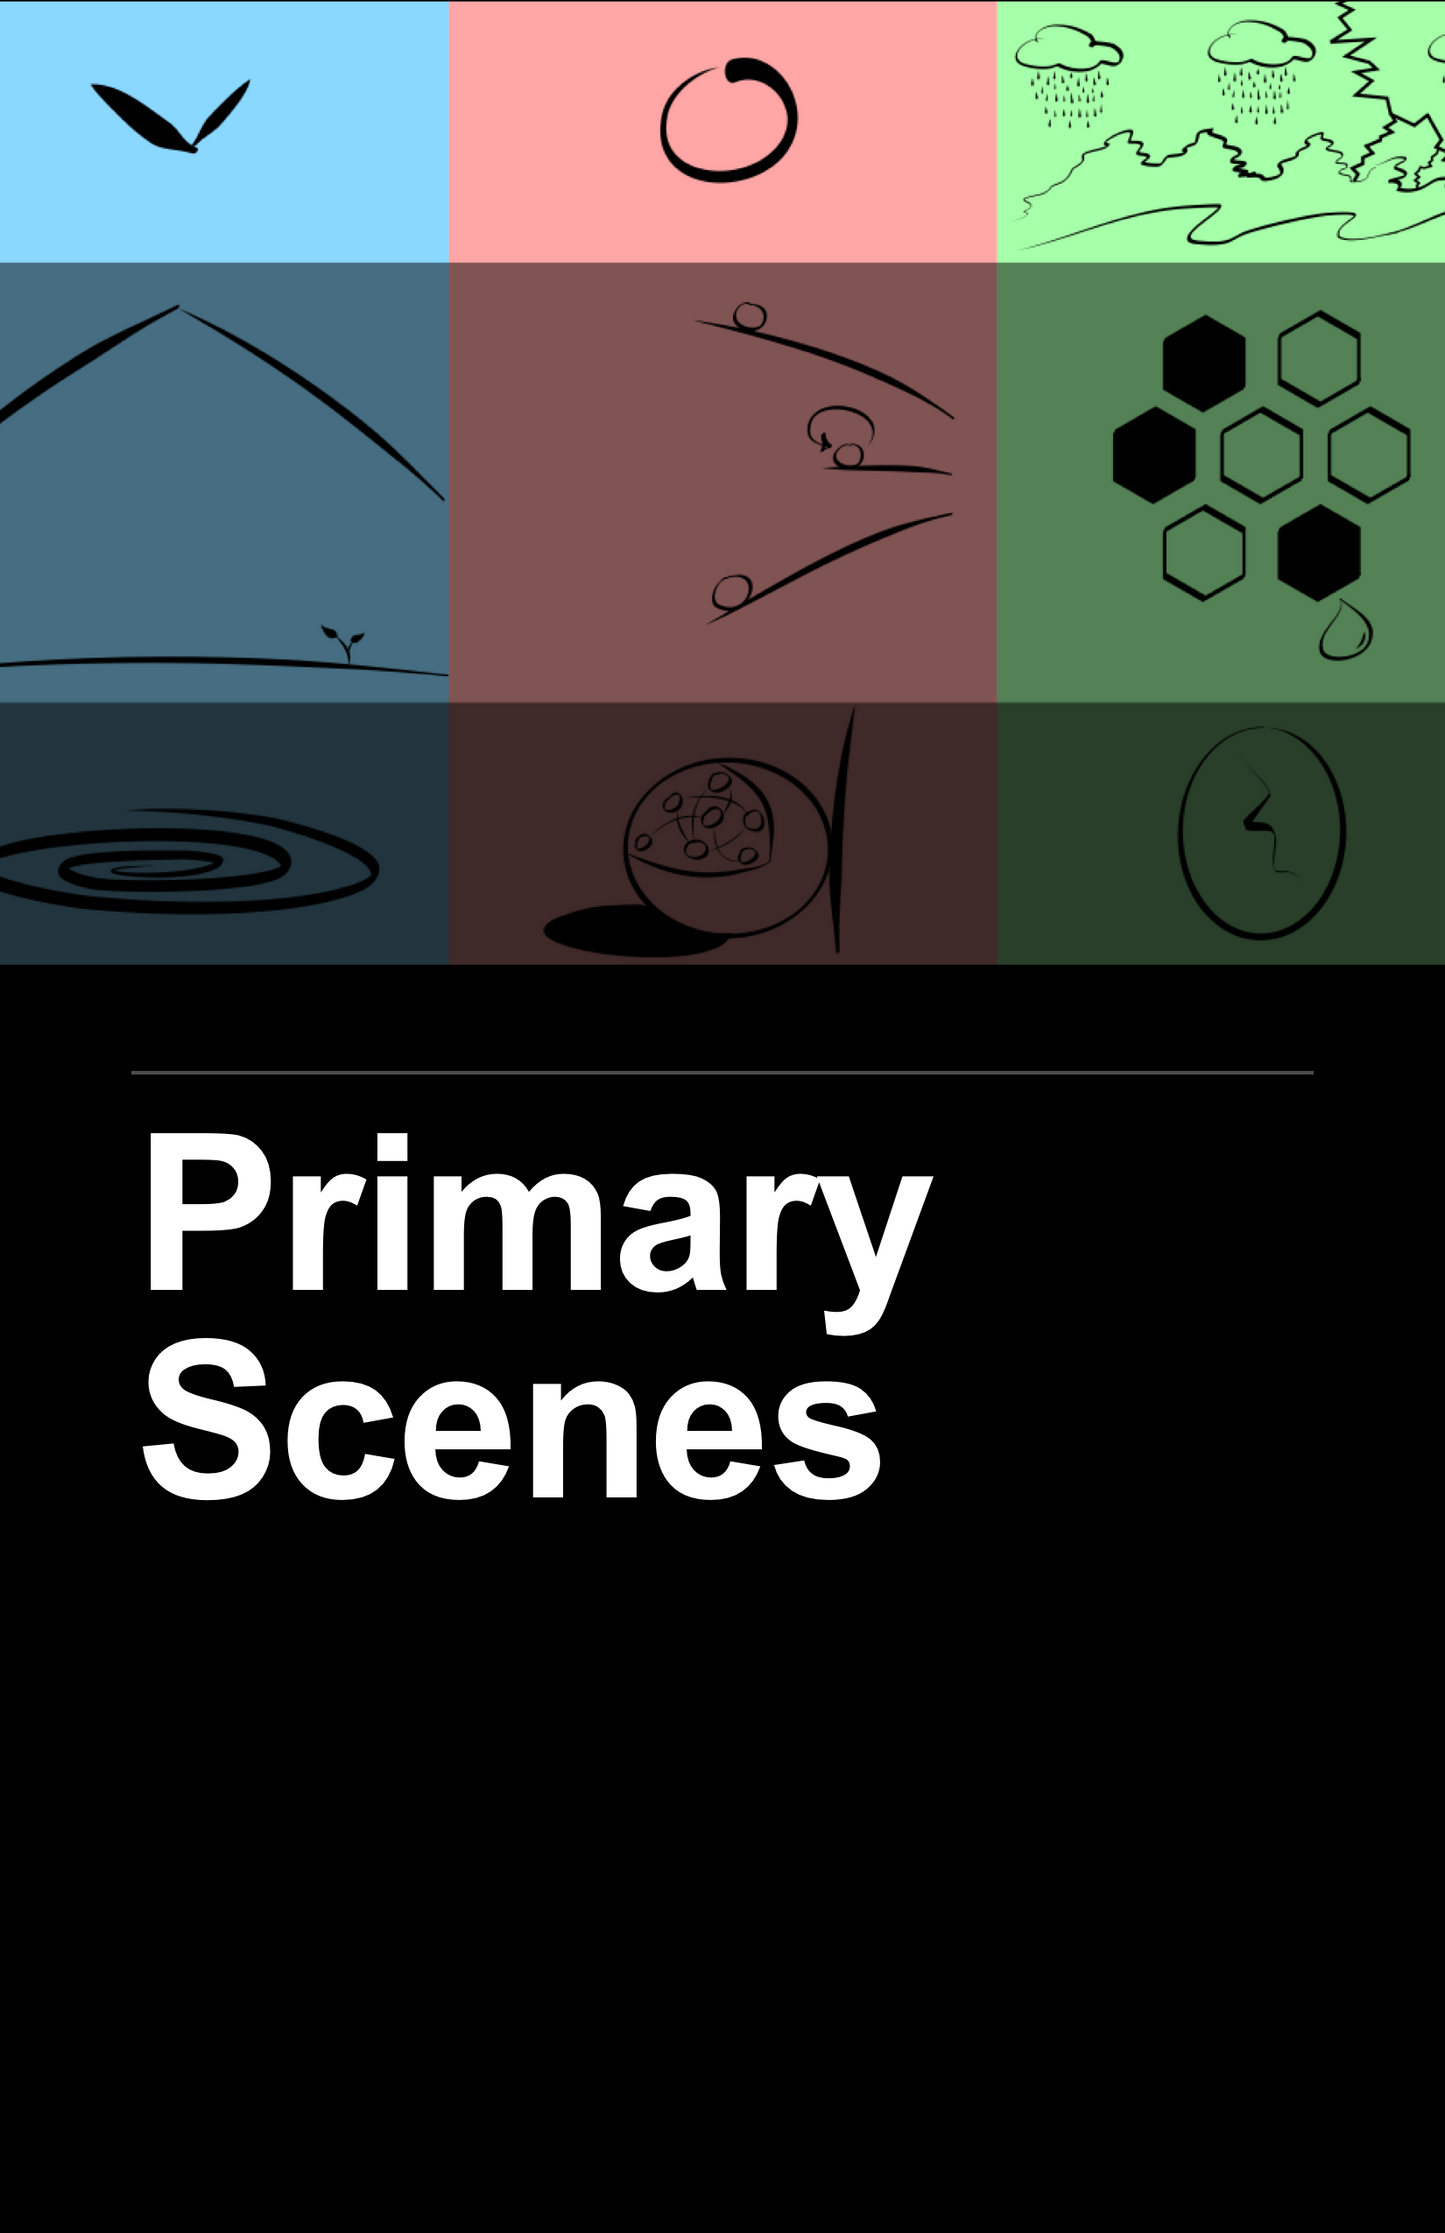 Primary Scenes Overview Book